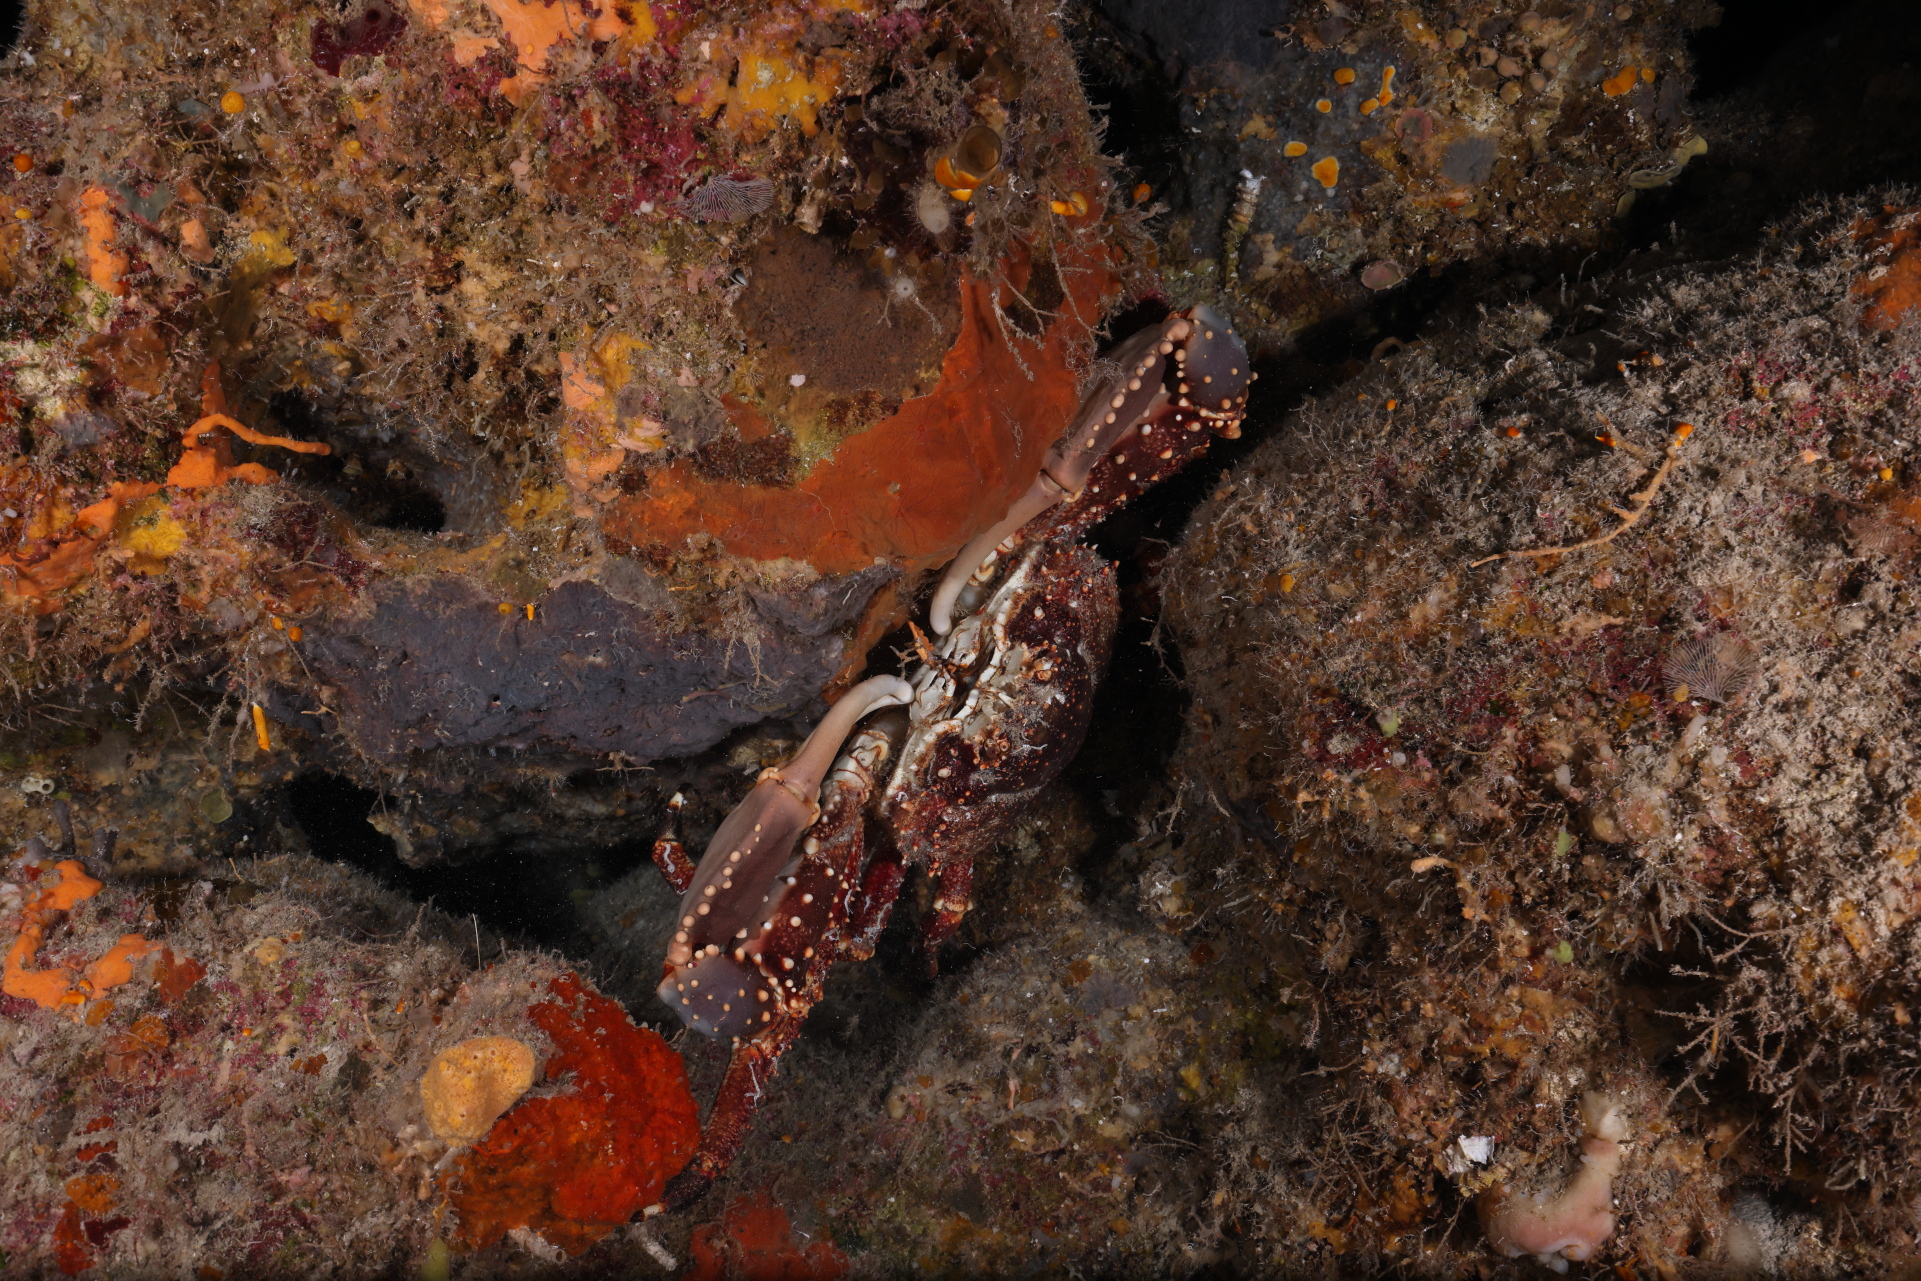 Crab in Rocks (Feb 2, 2023)